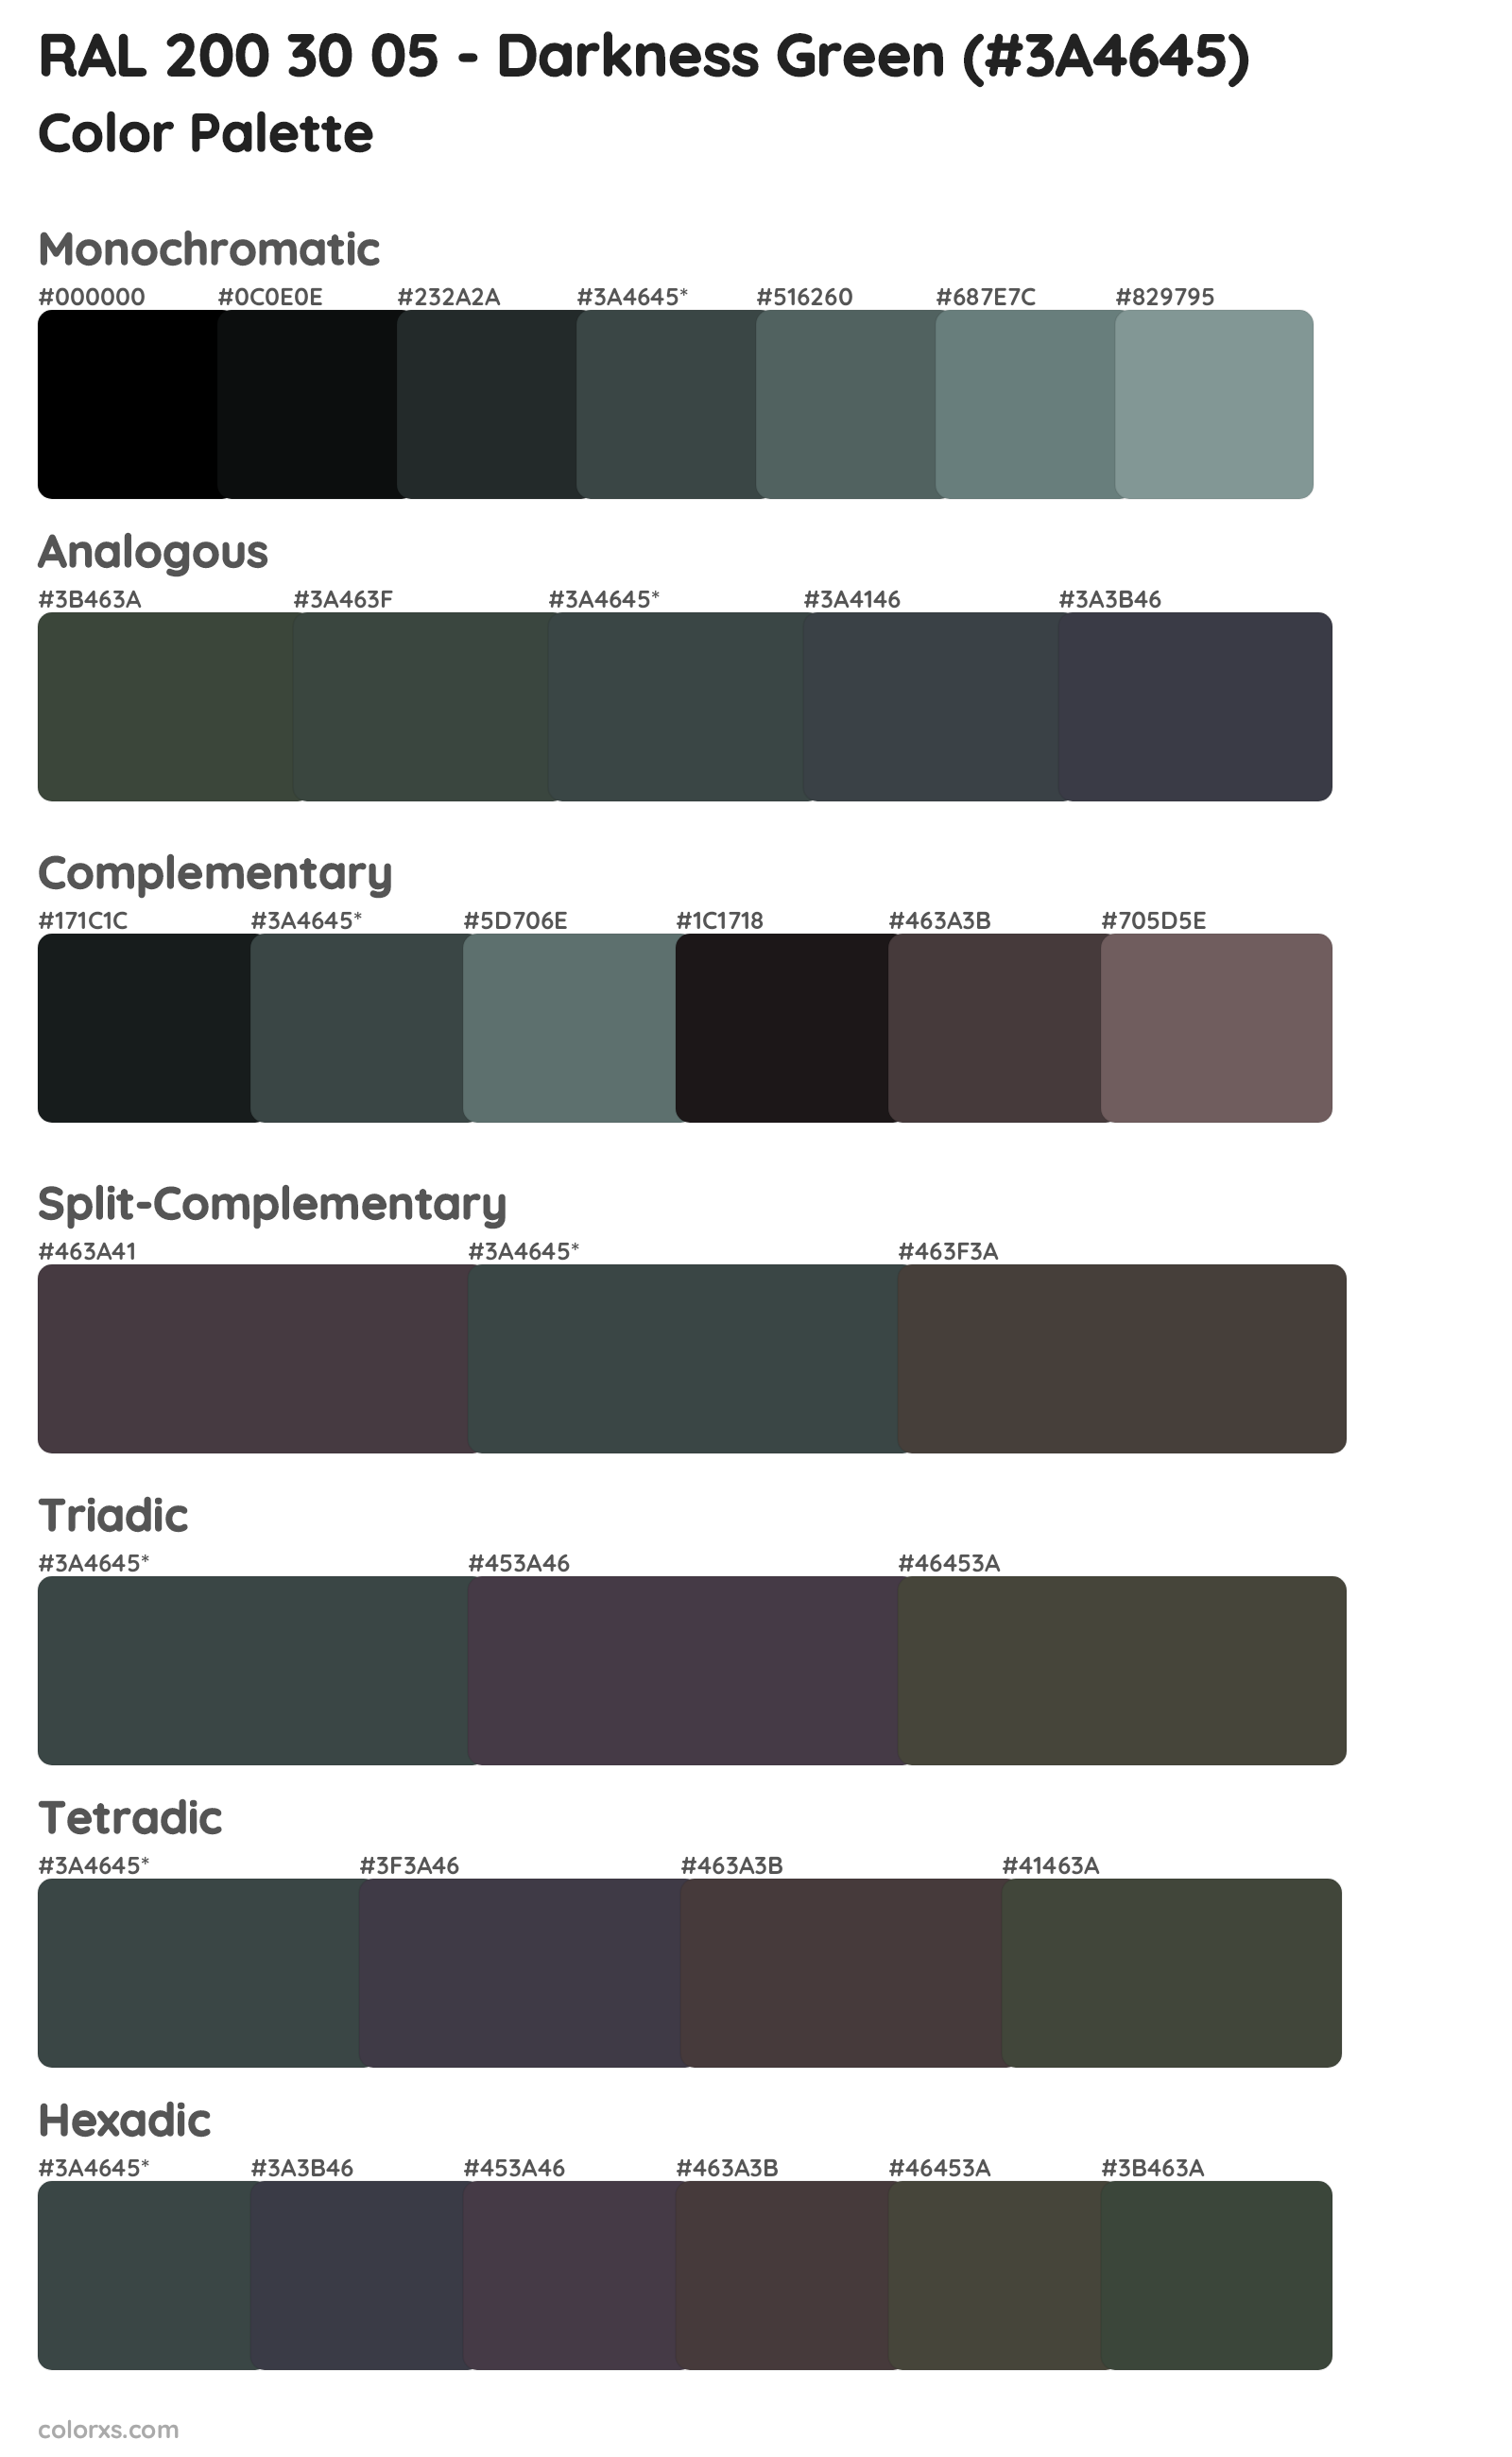 RAL 200 30 05 - Darkness Green Color Scheme Palettes